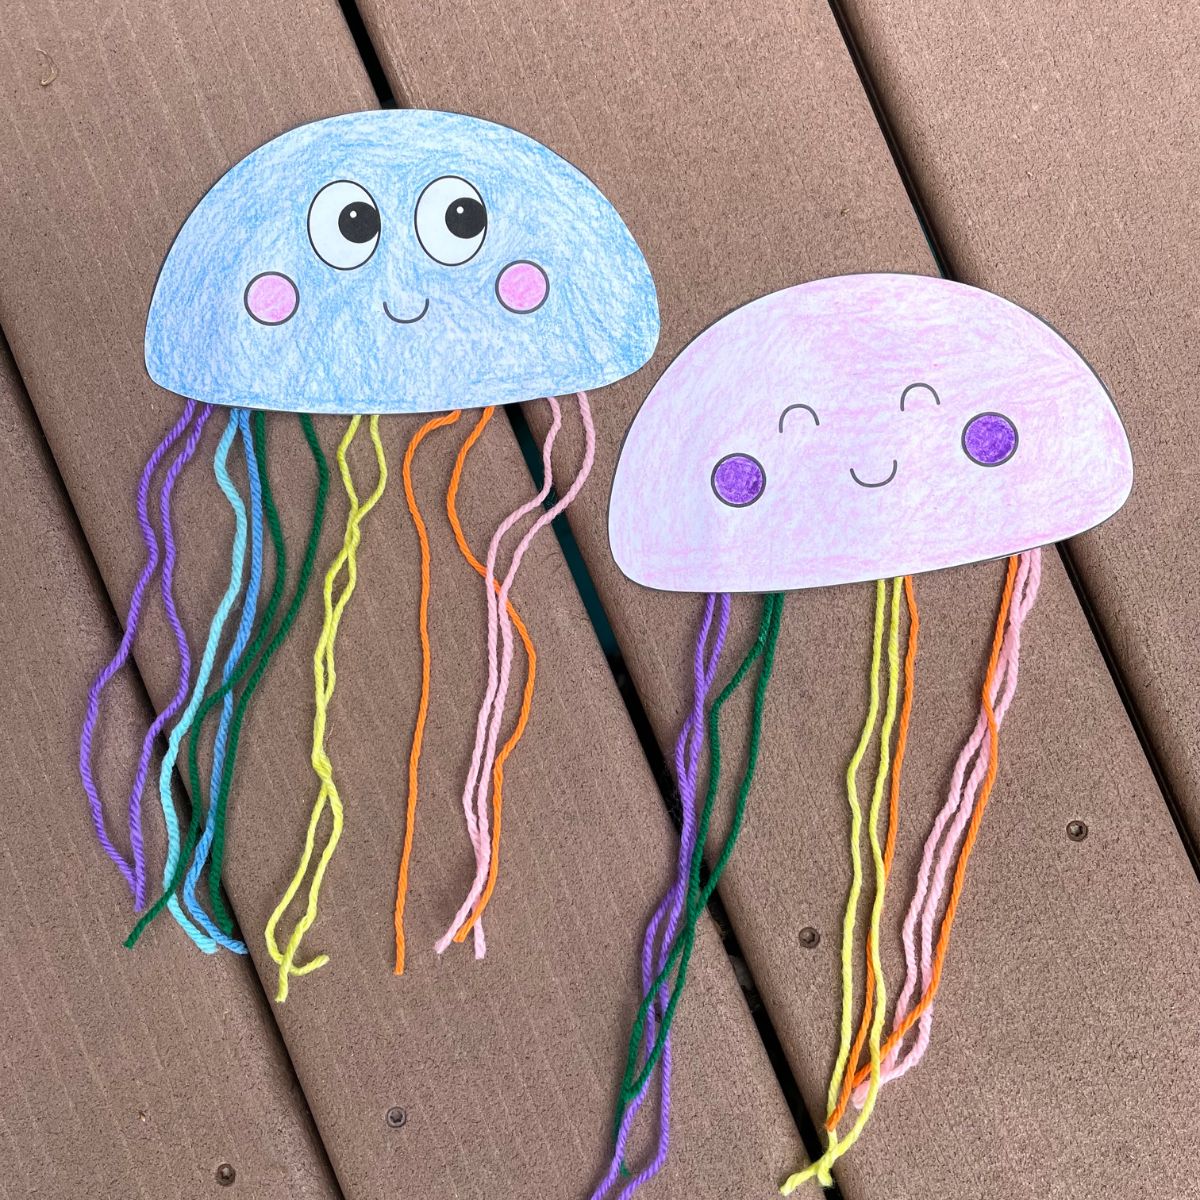 jellyfish craft template